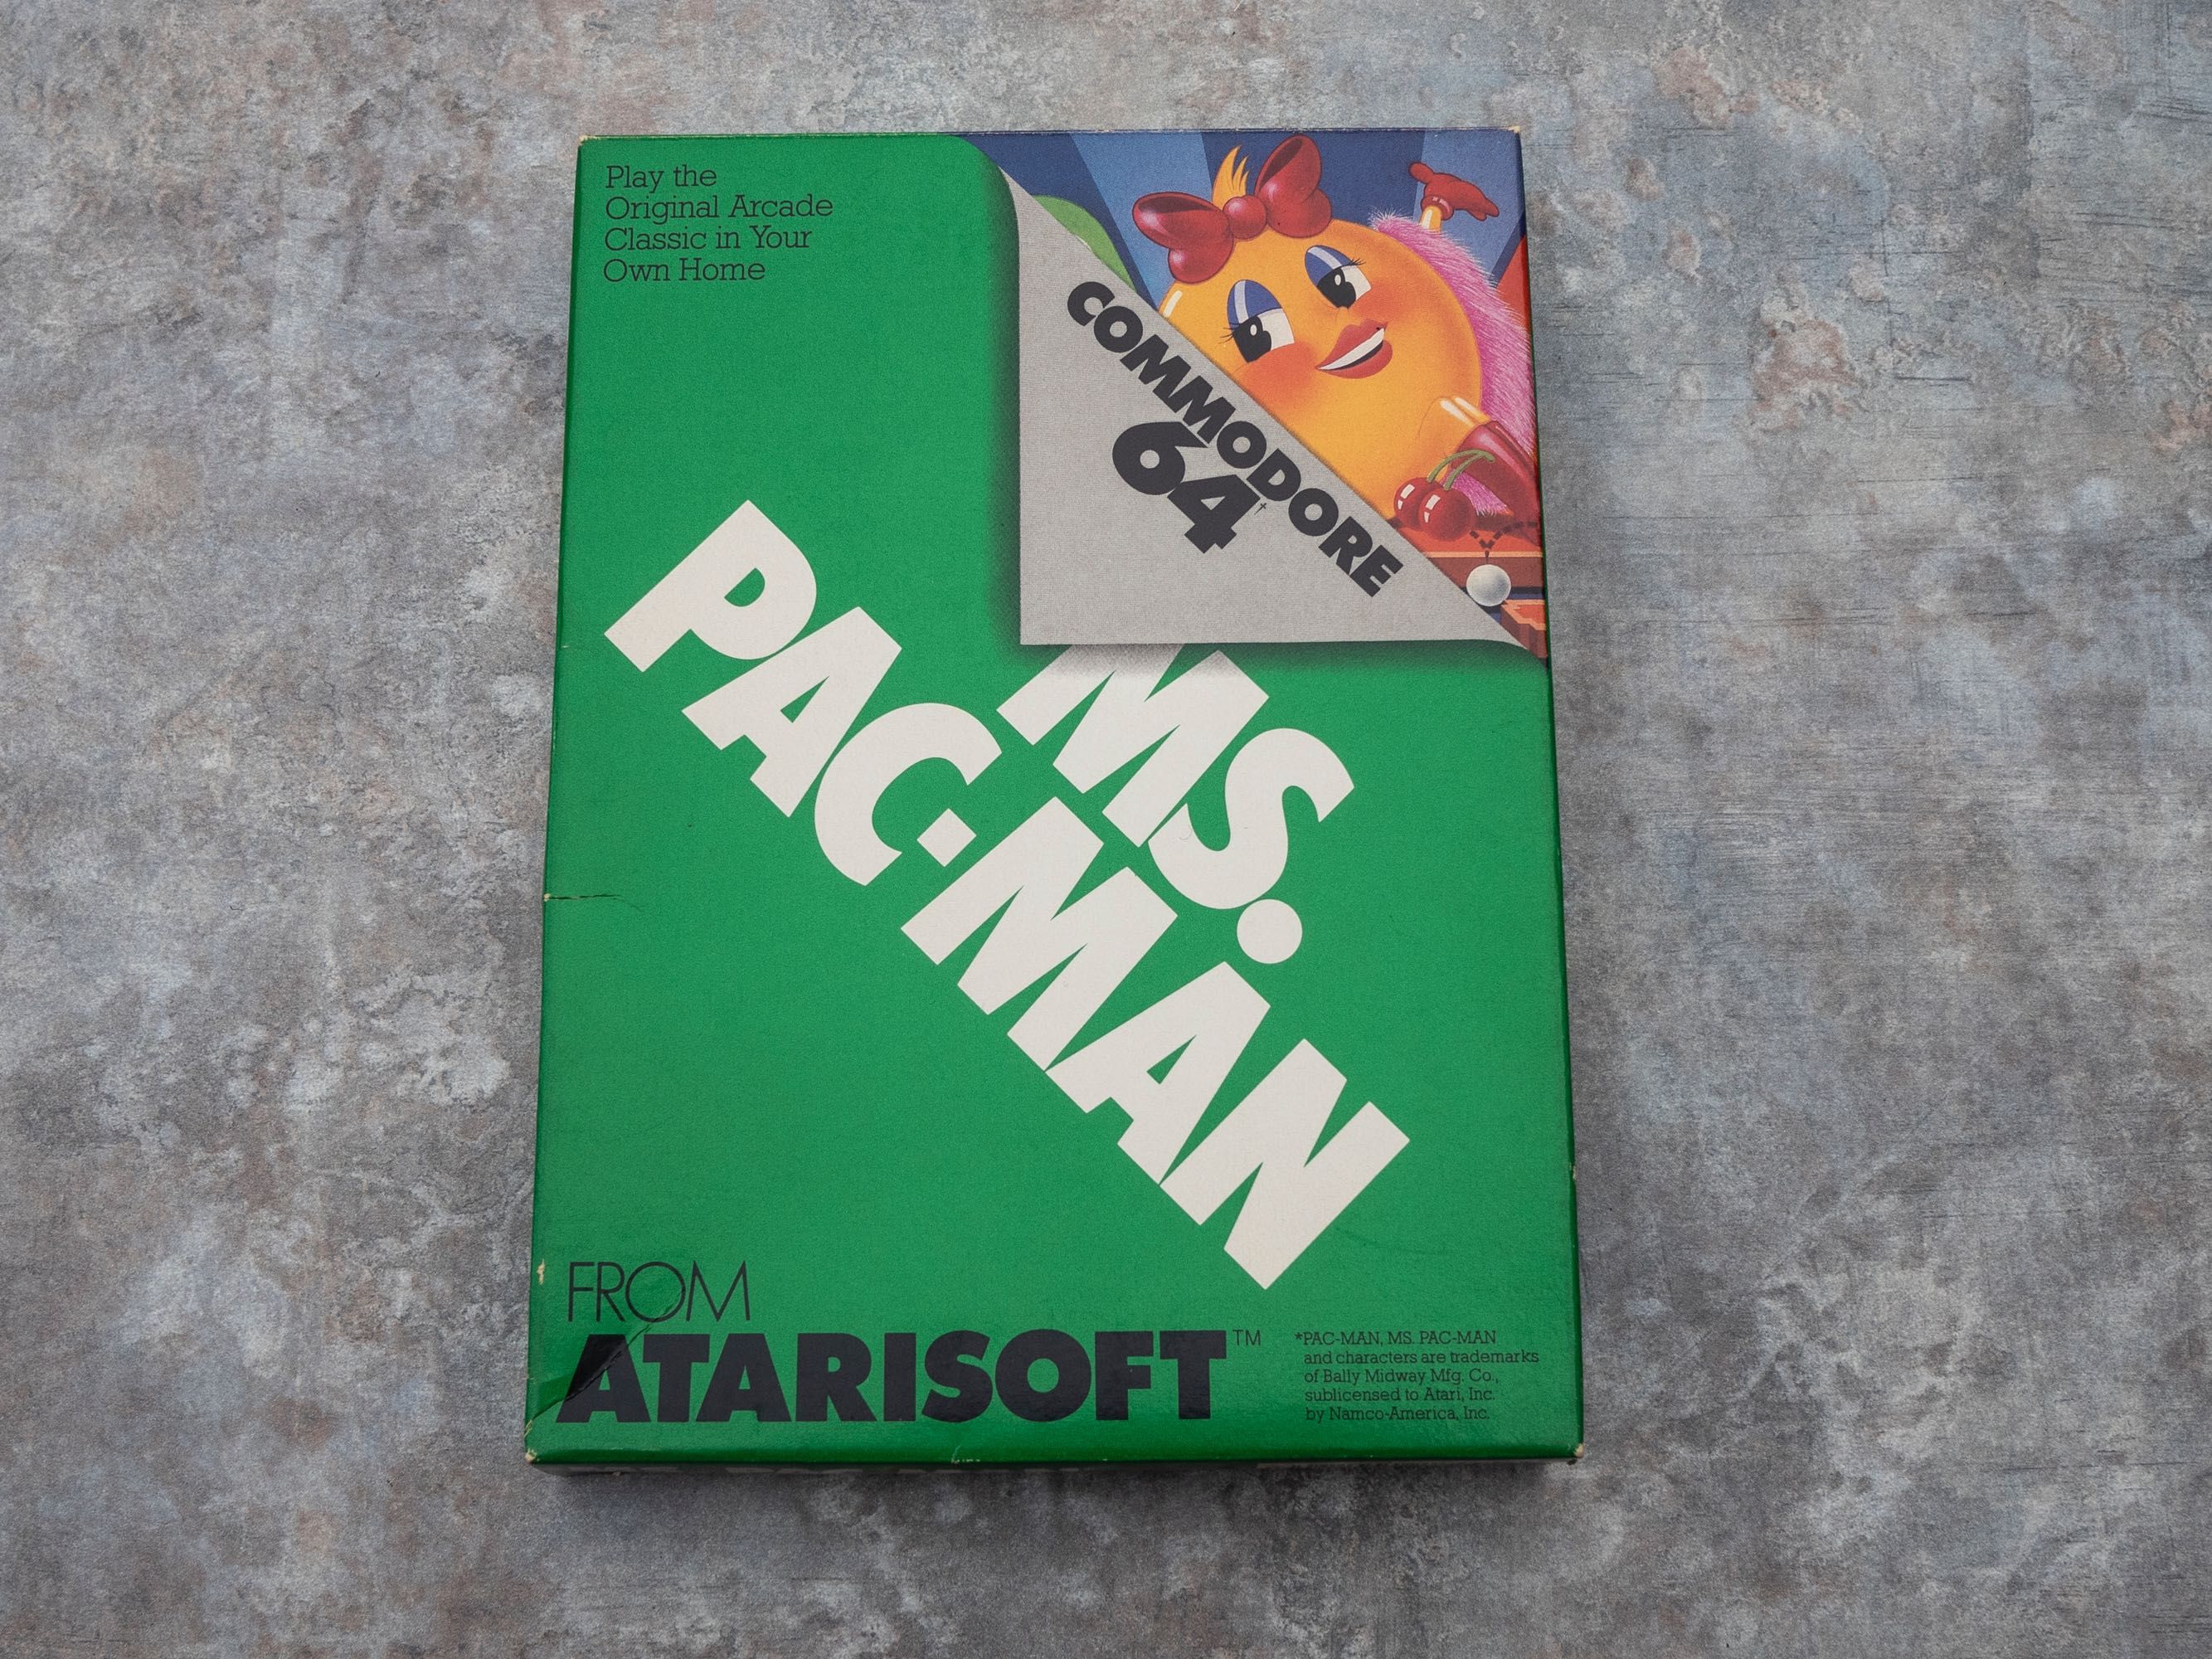 Atari Ms. Pac Man. Wersja dla Commodore 64. Cartridge w pudełku